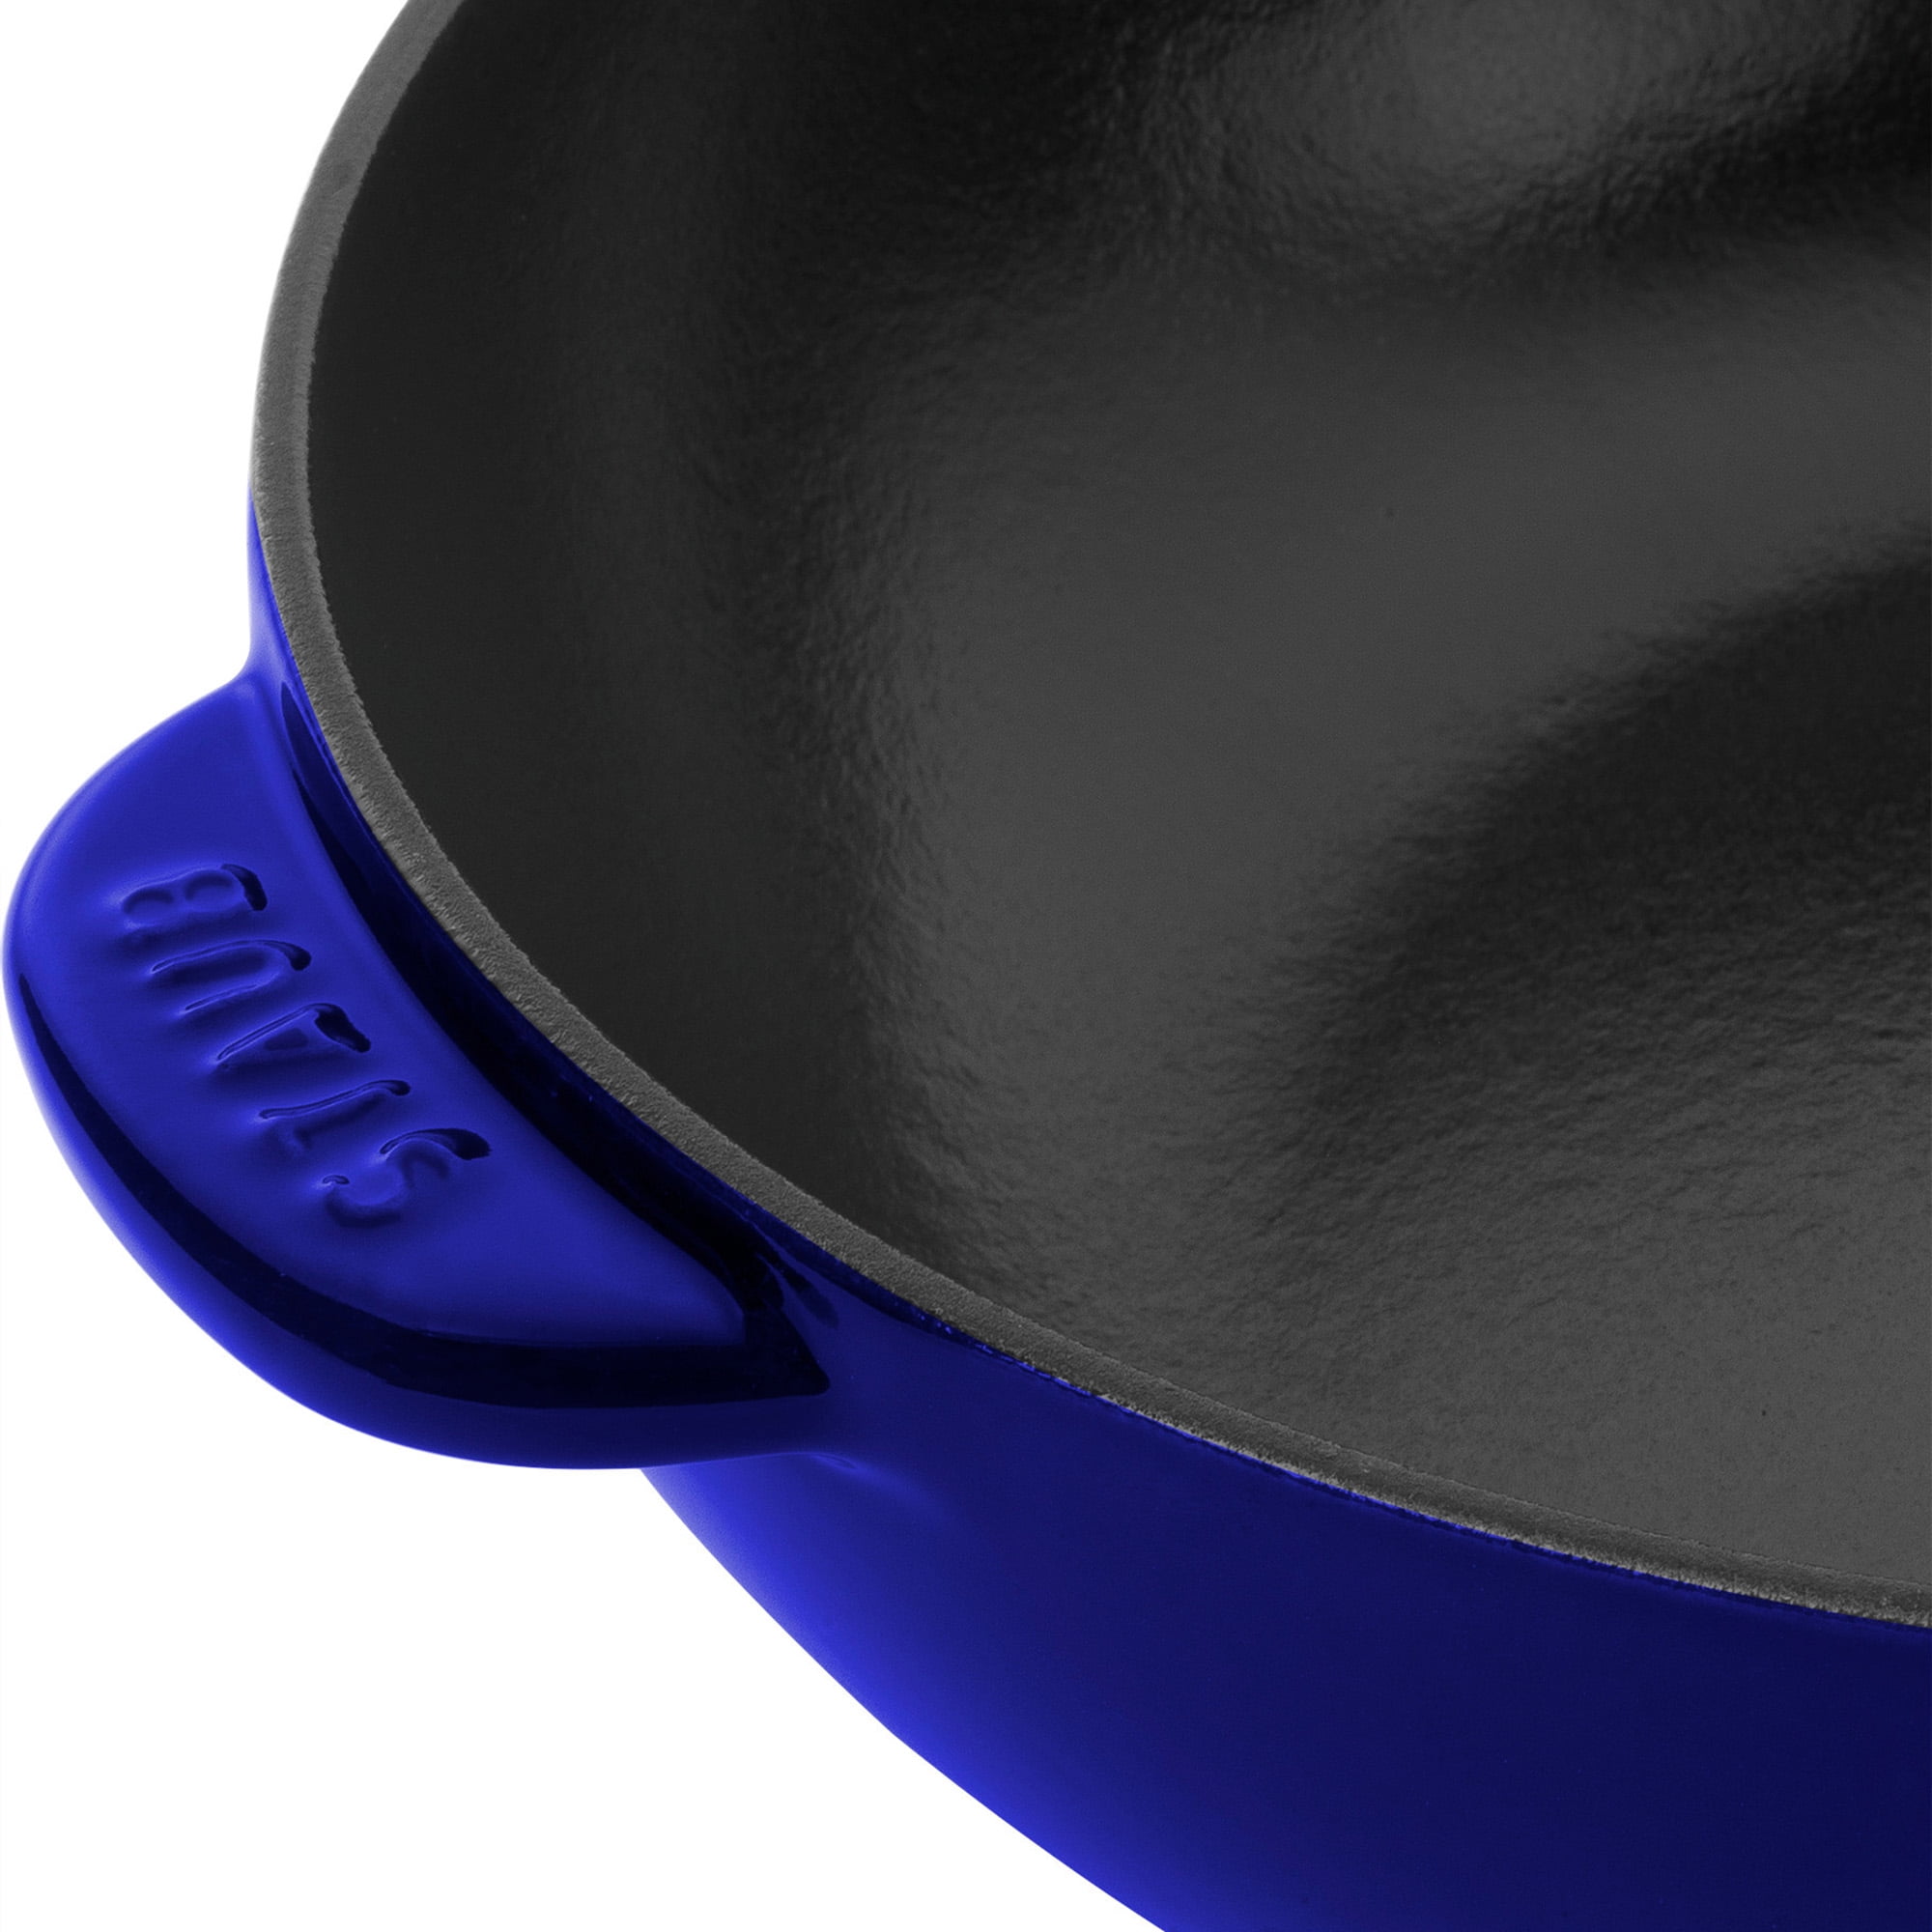 Staub Cast Iron 10-inch Daily Pan with Glass Lid - Dark Blue